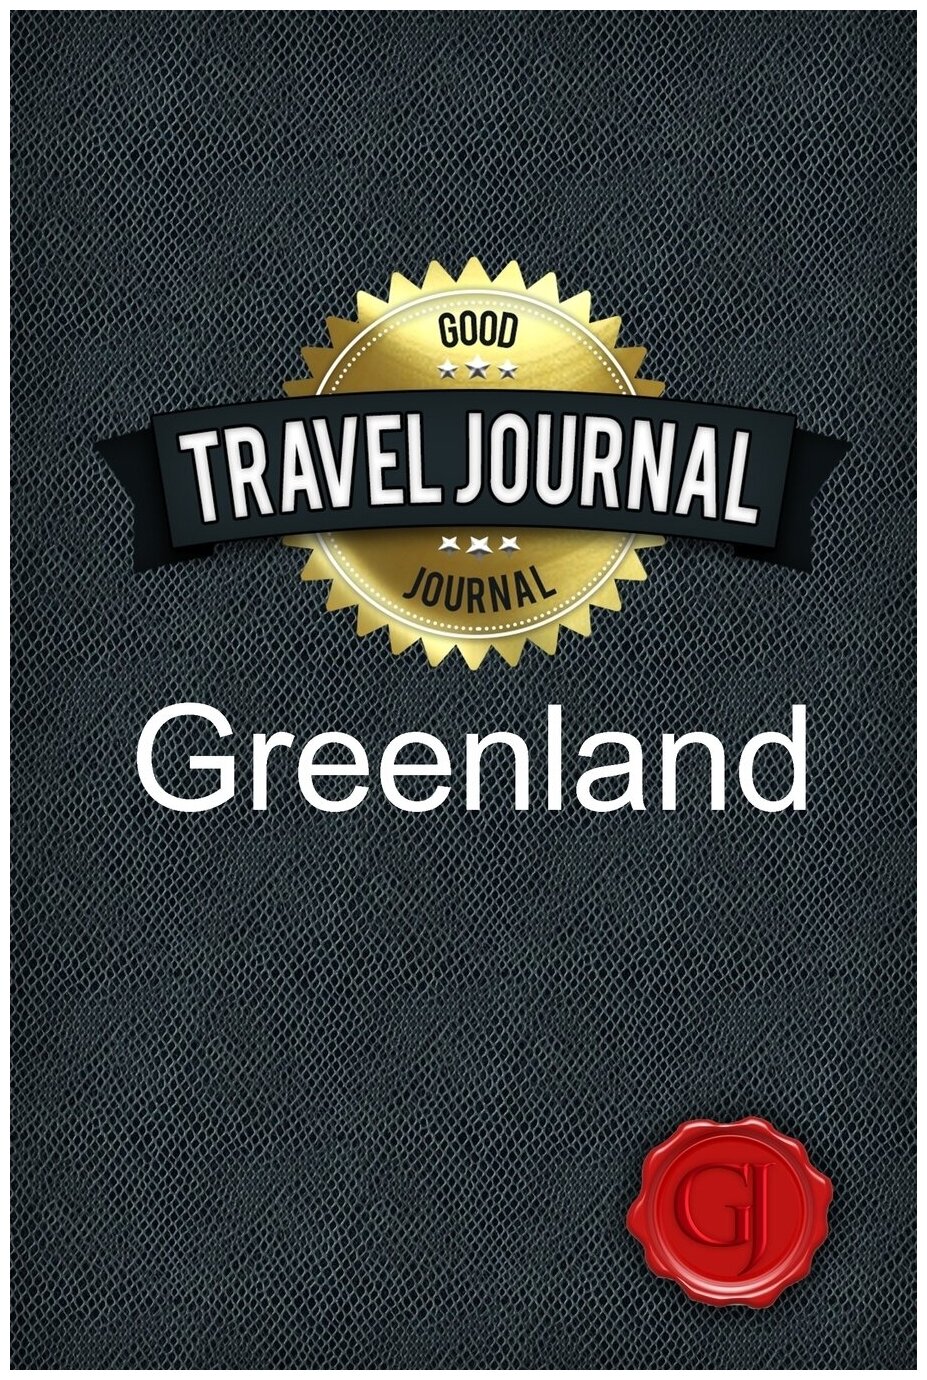 Travel Journal Greenland